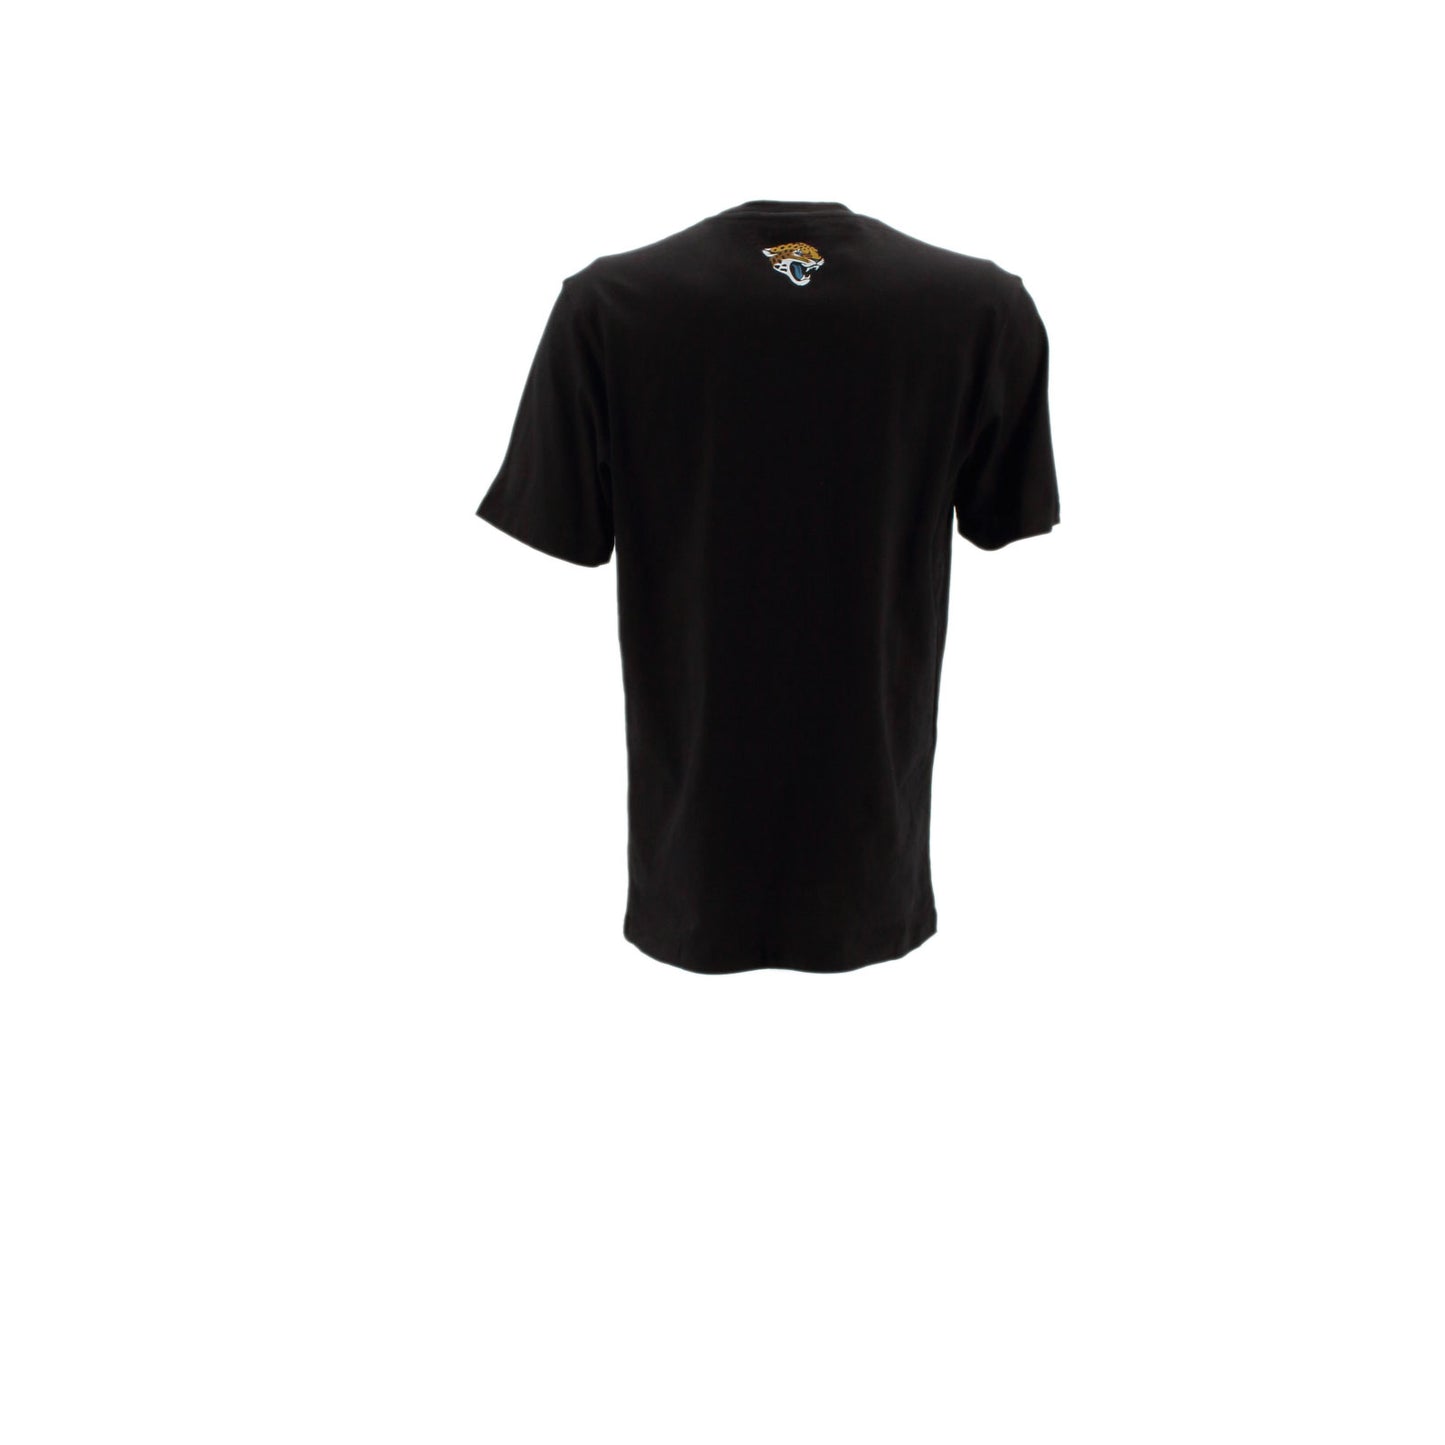 Fanatics NFL Jacksonville Jaguars Logo T-Shirt Herren schwarz 2019MBLK1OSJJA - Brand Dealers Arena e.K. - BDA24